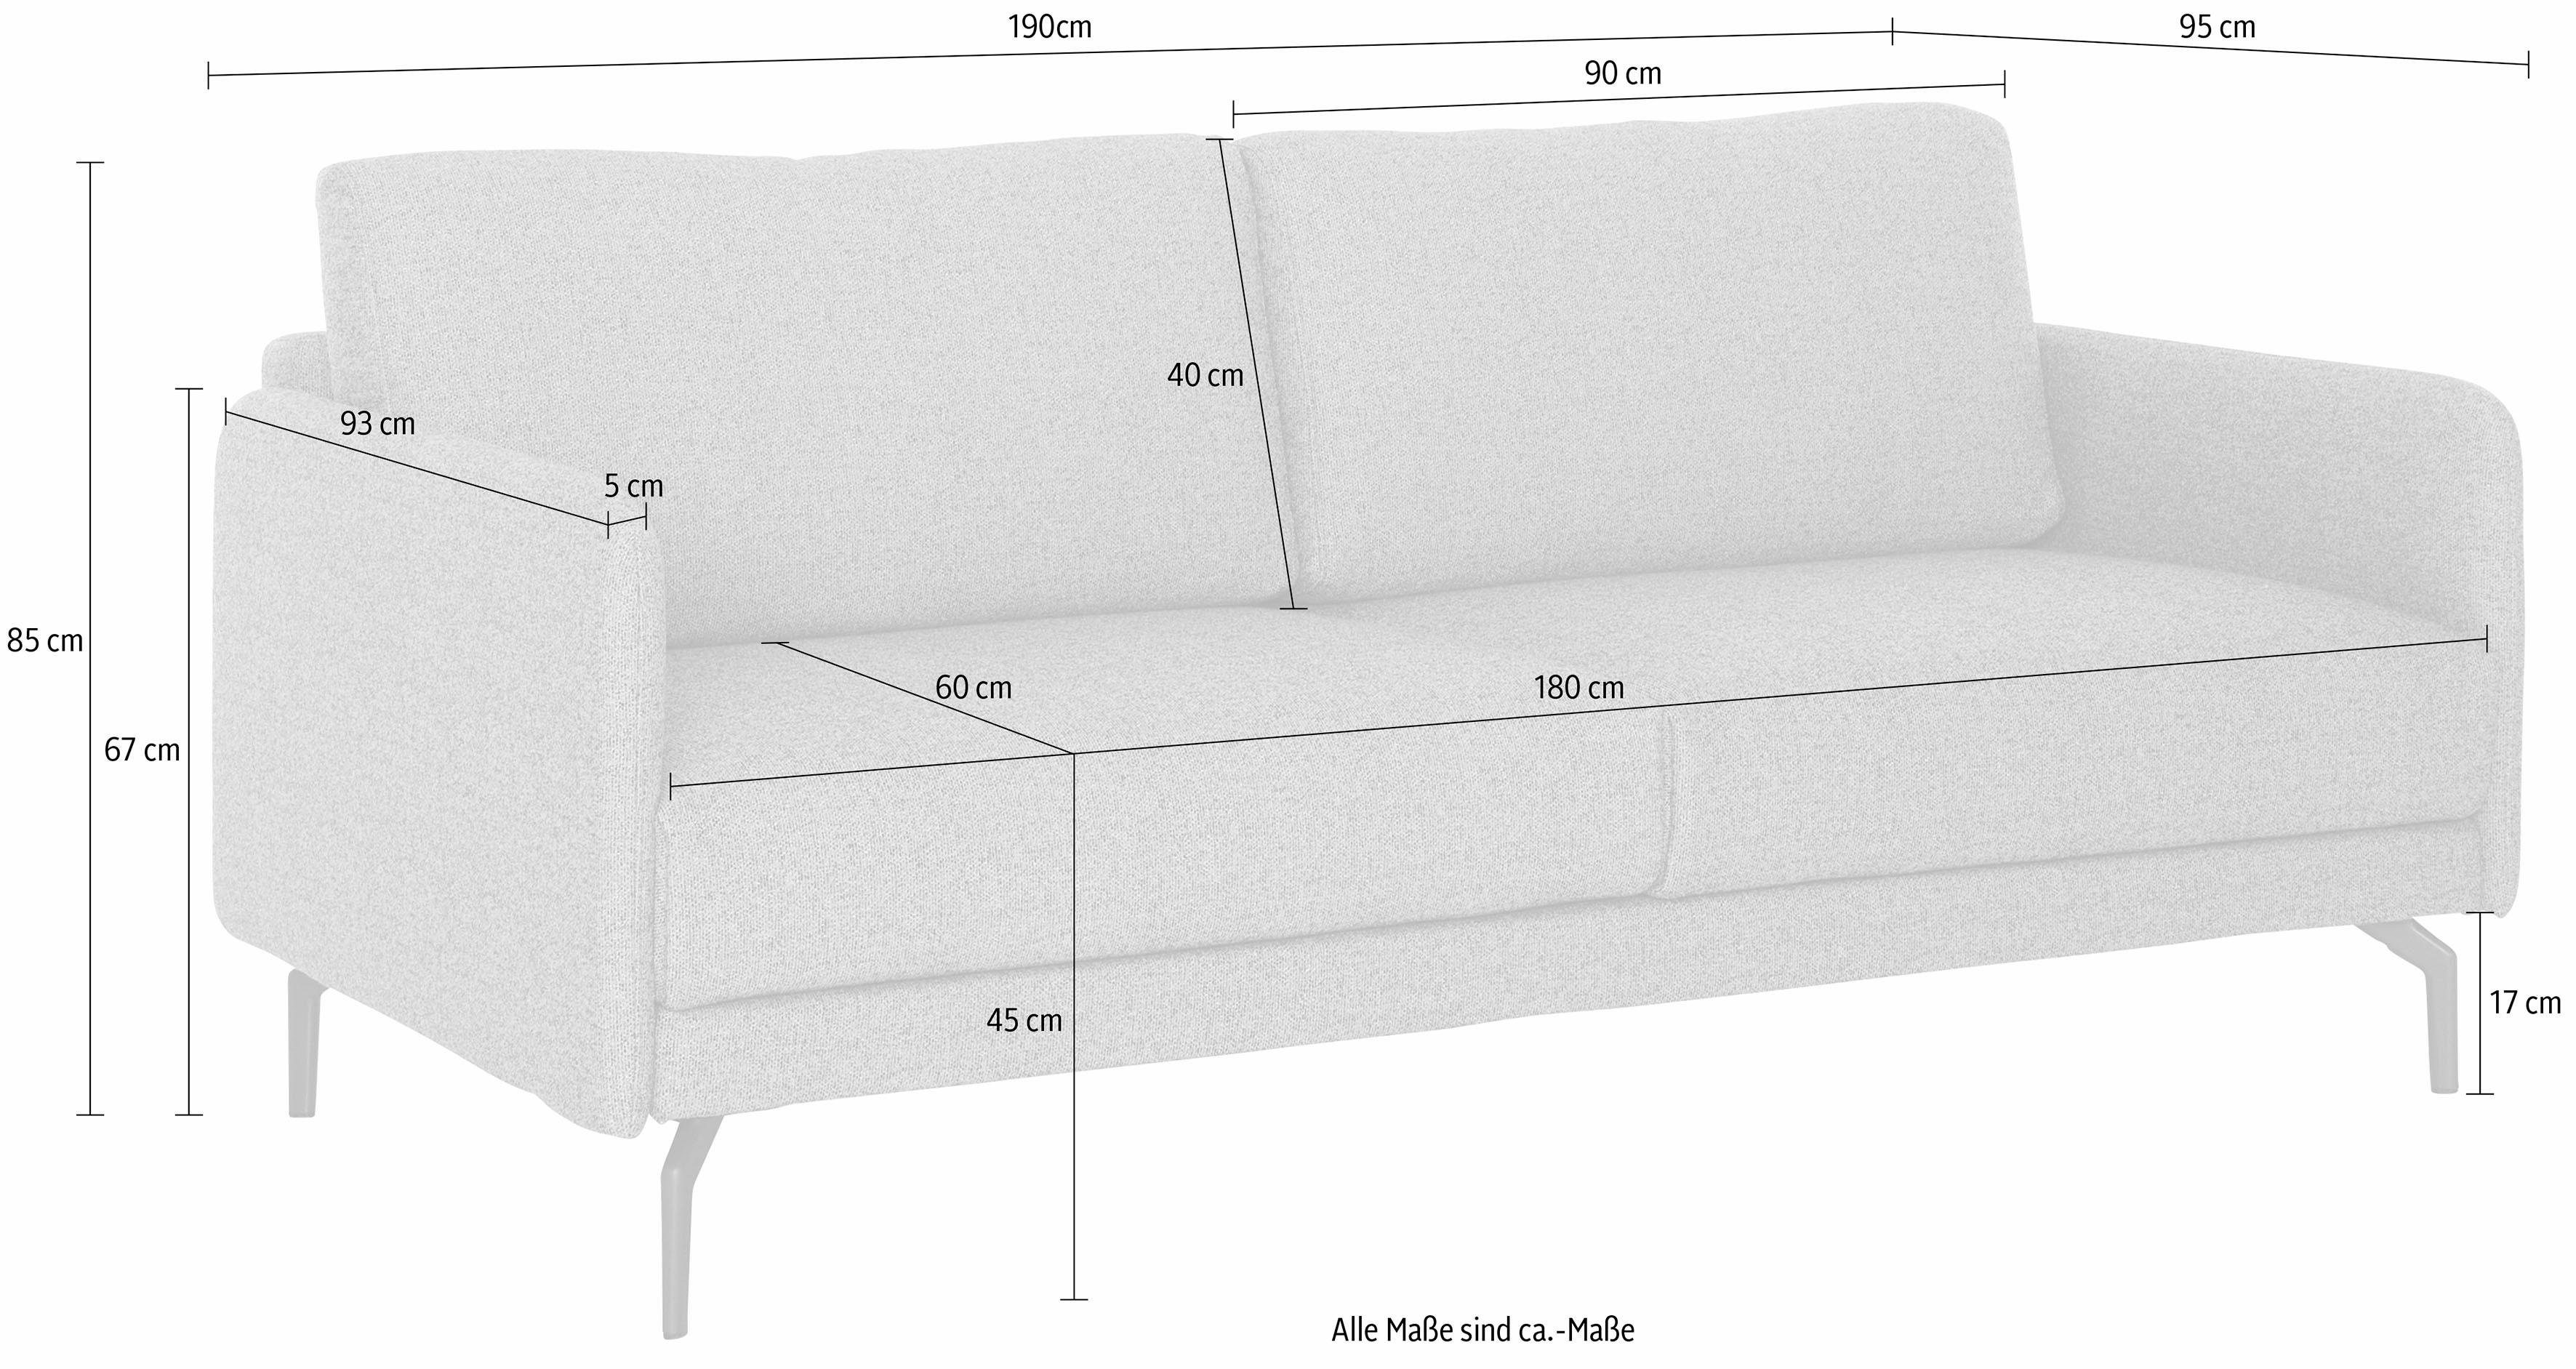 Umbragrau 3-Sitzer hülsta Armlehne sehr schmal, Breite cm, Alugussfuß 190 sofa hs.450,